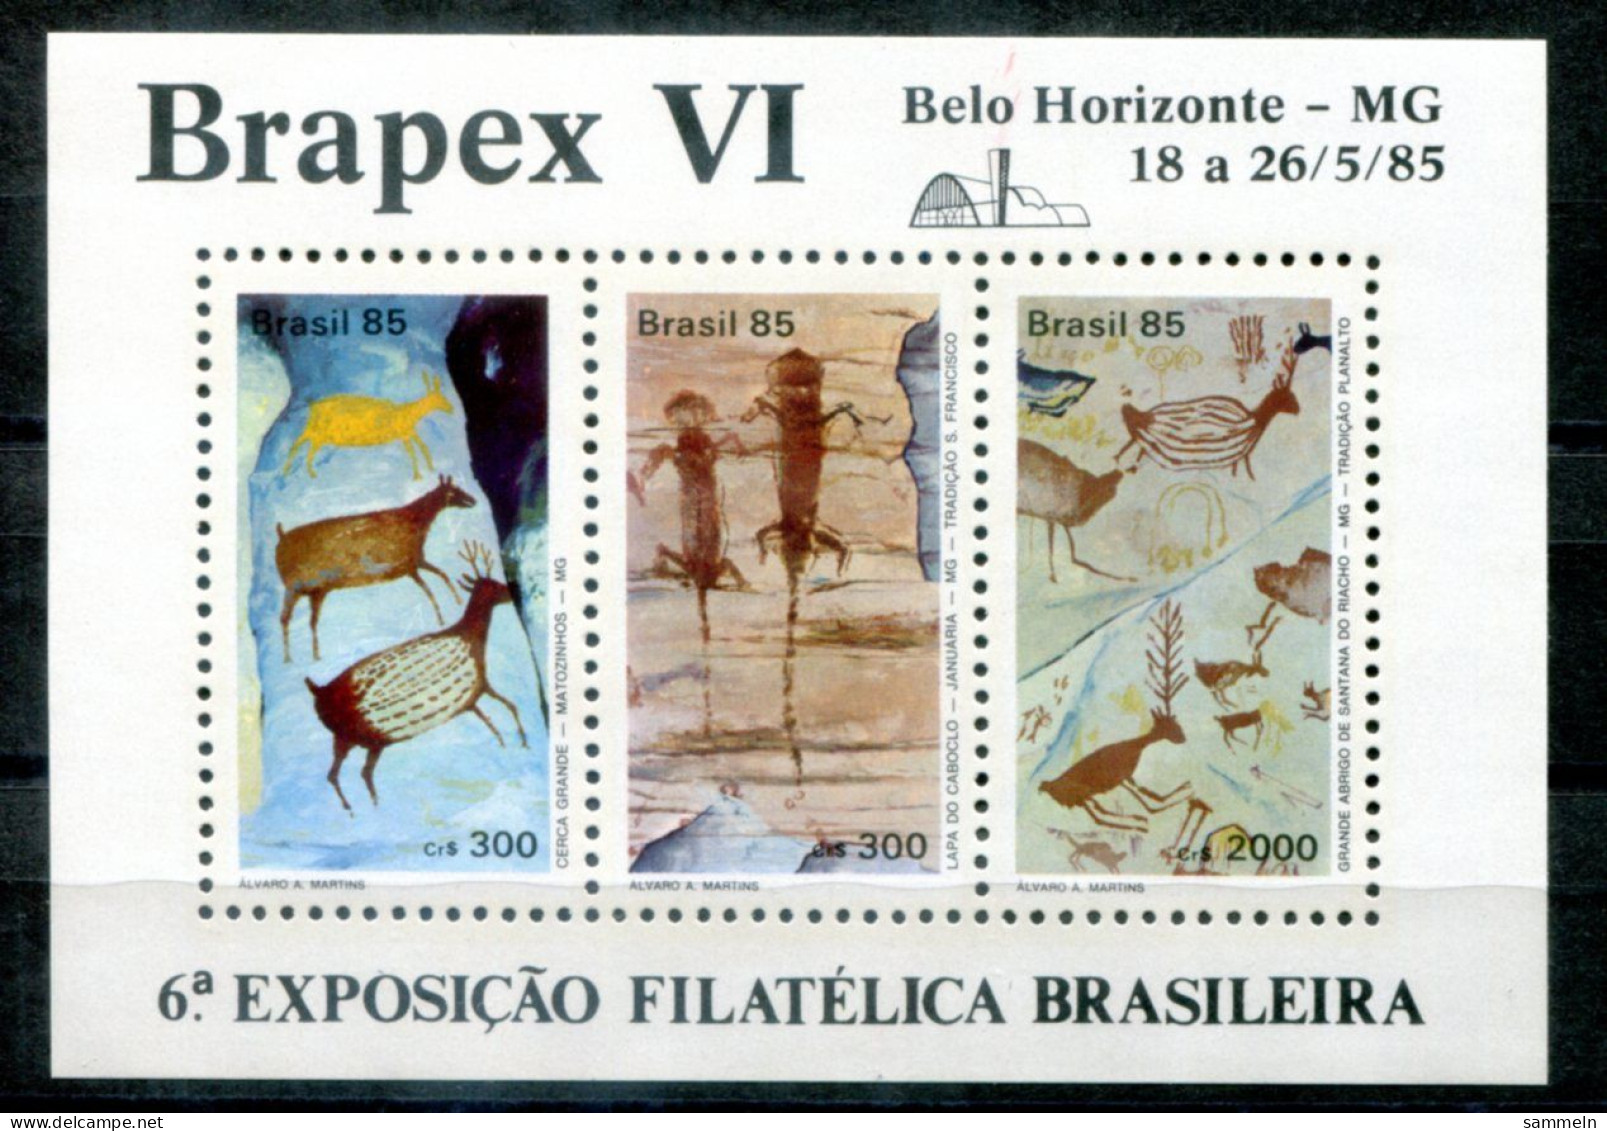 BRASILIEN Block 67, Bl.67 Mnh - Höhlenmalerei, Cave Painting, Peinture Rupestre - BRAZIL / BRÉSIL - Blocks & Sheetlets